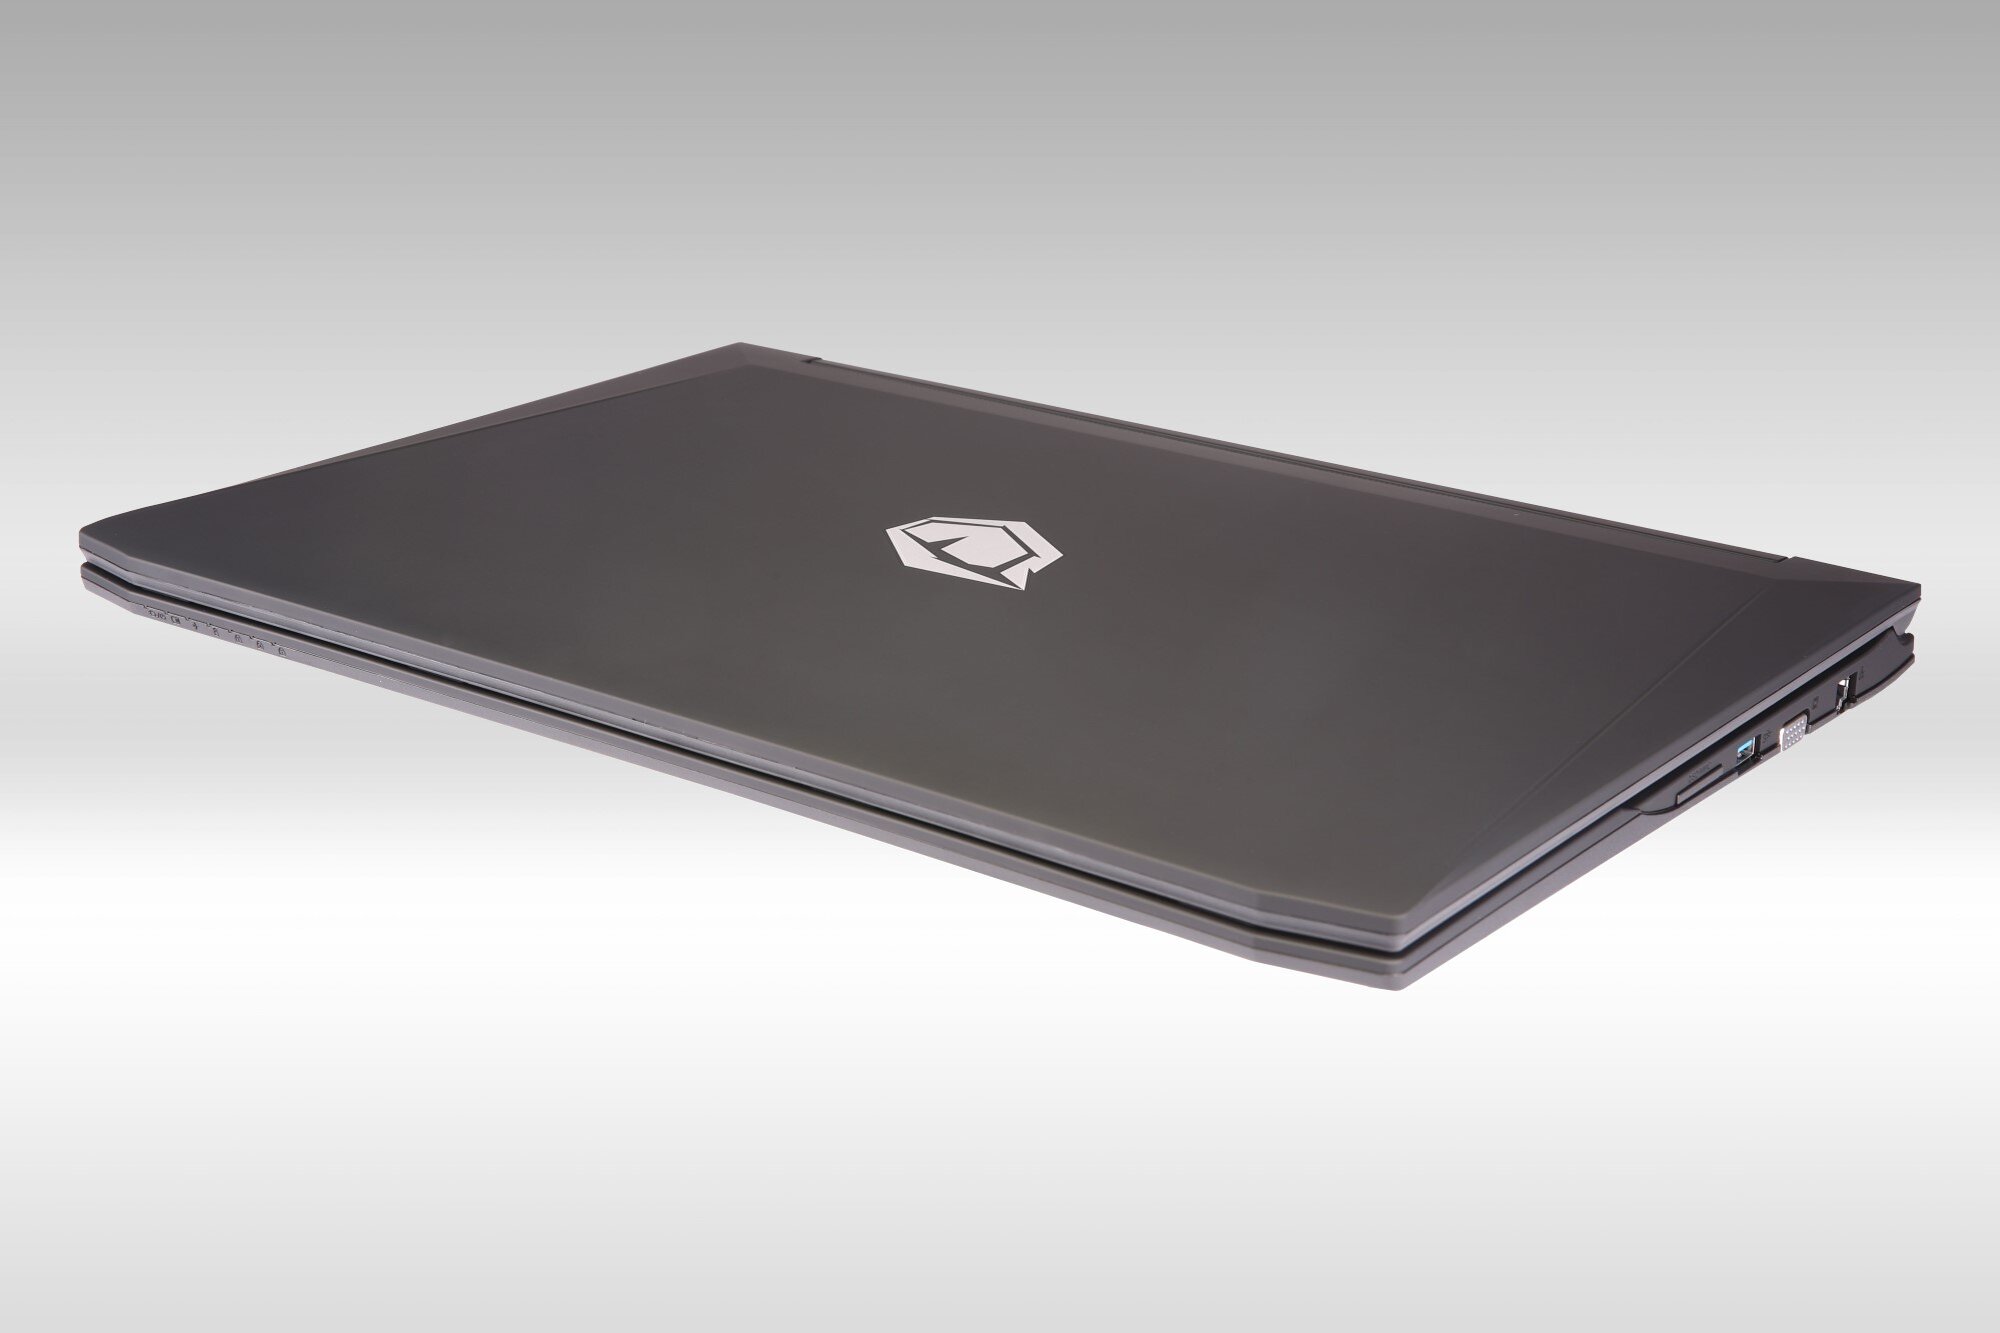 Abra A7 V6.4.2 17.3" Gaming Laptop 14615